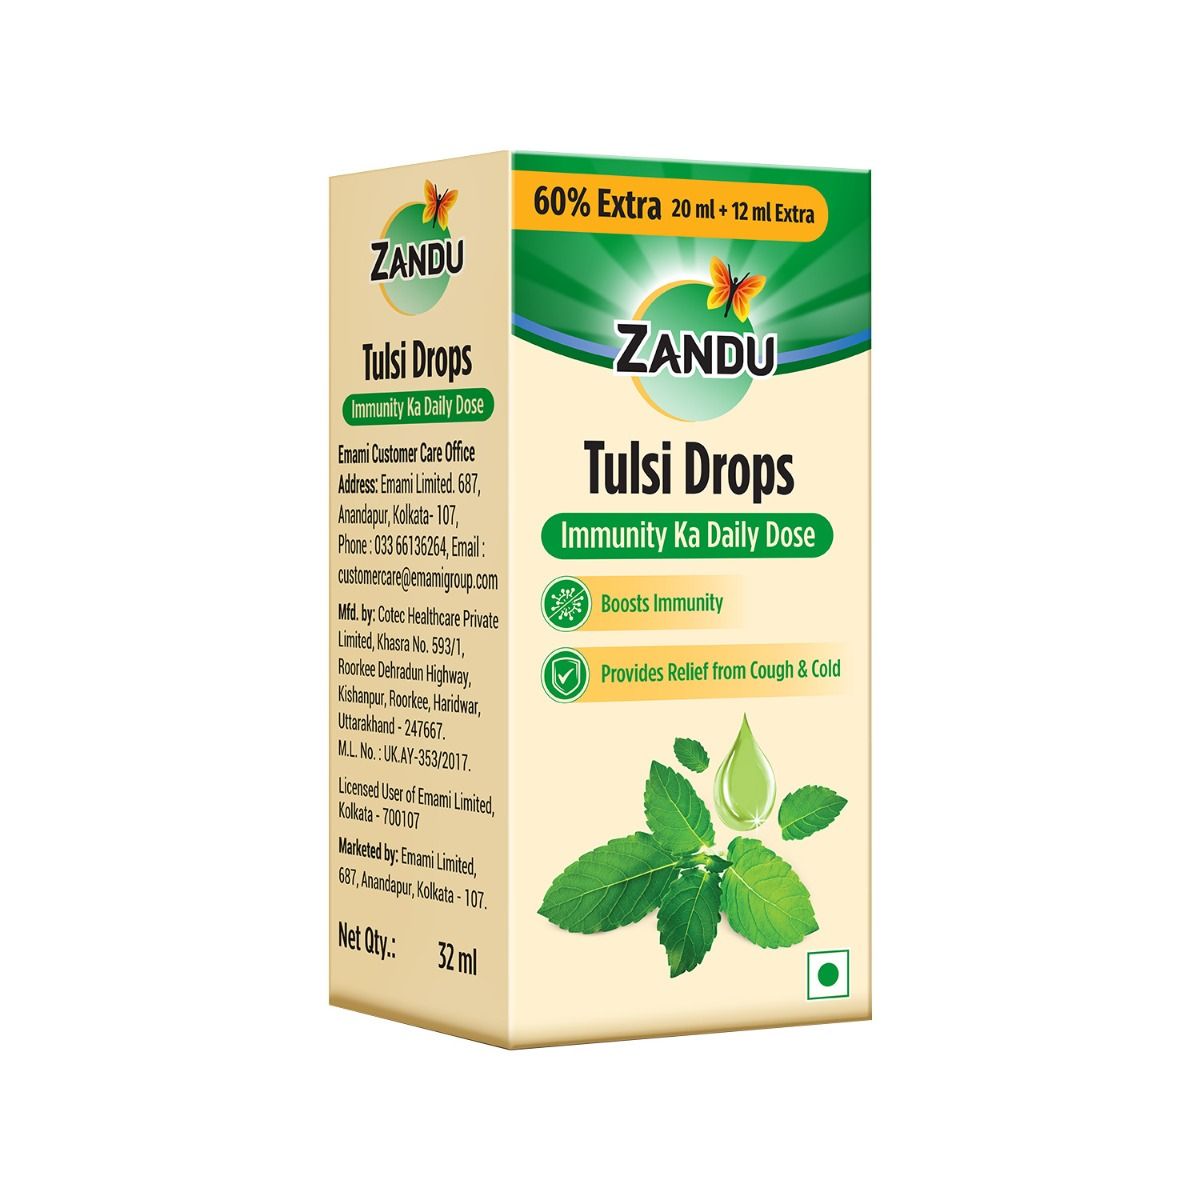 Zandu Tulsi Drops, 32 ml, Pack of 1 